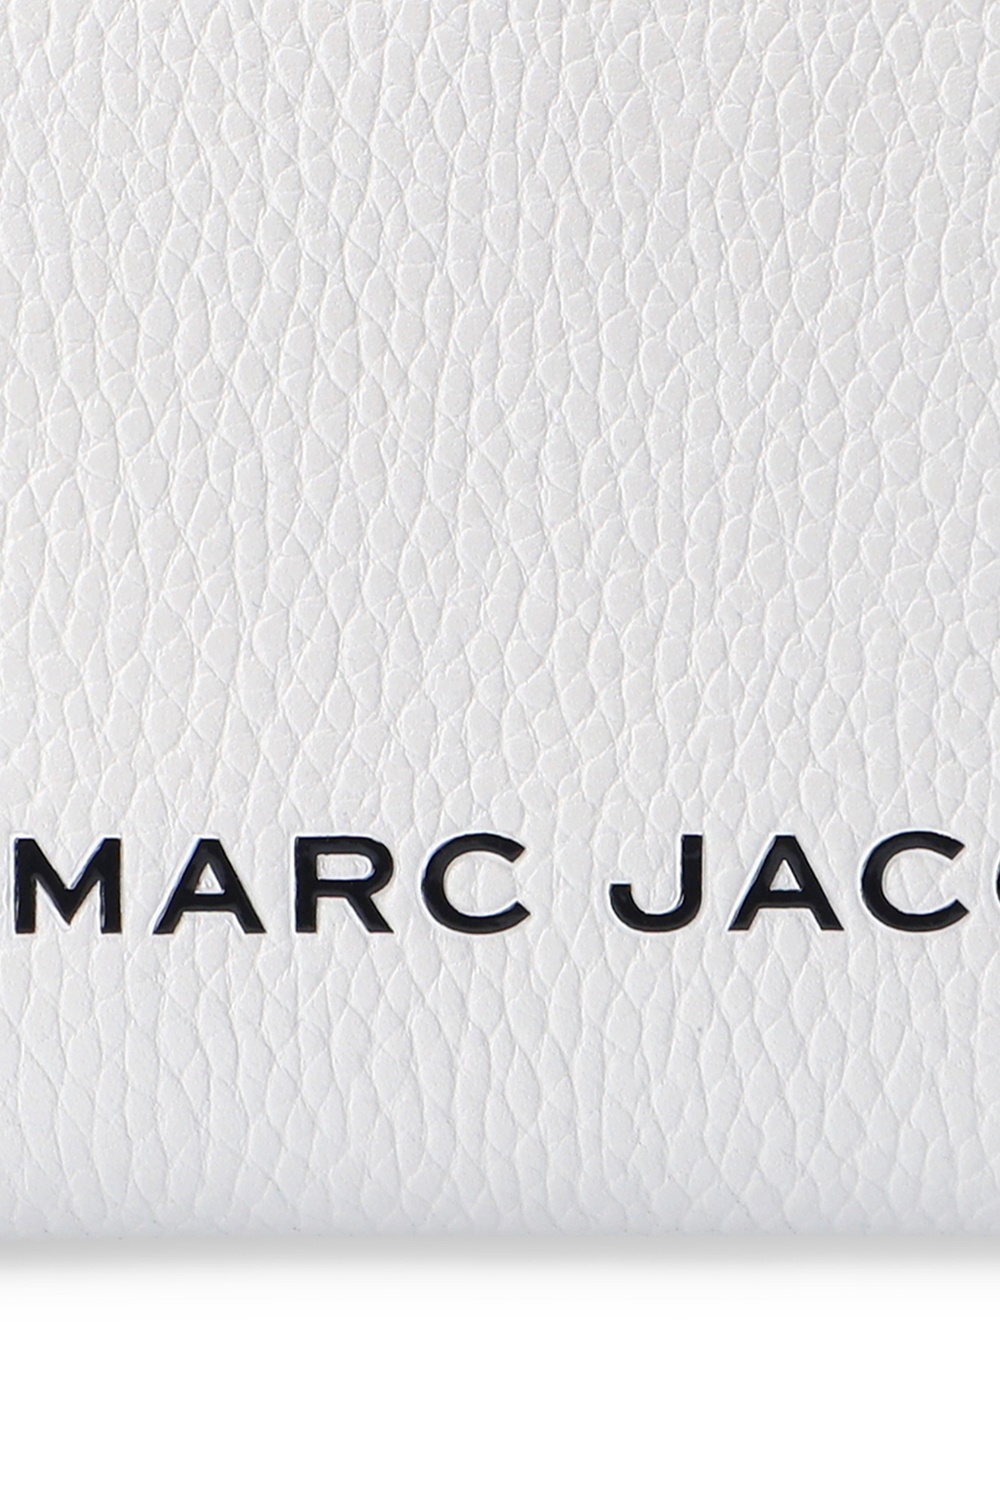 Marc Jacobs walkinged wallet